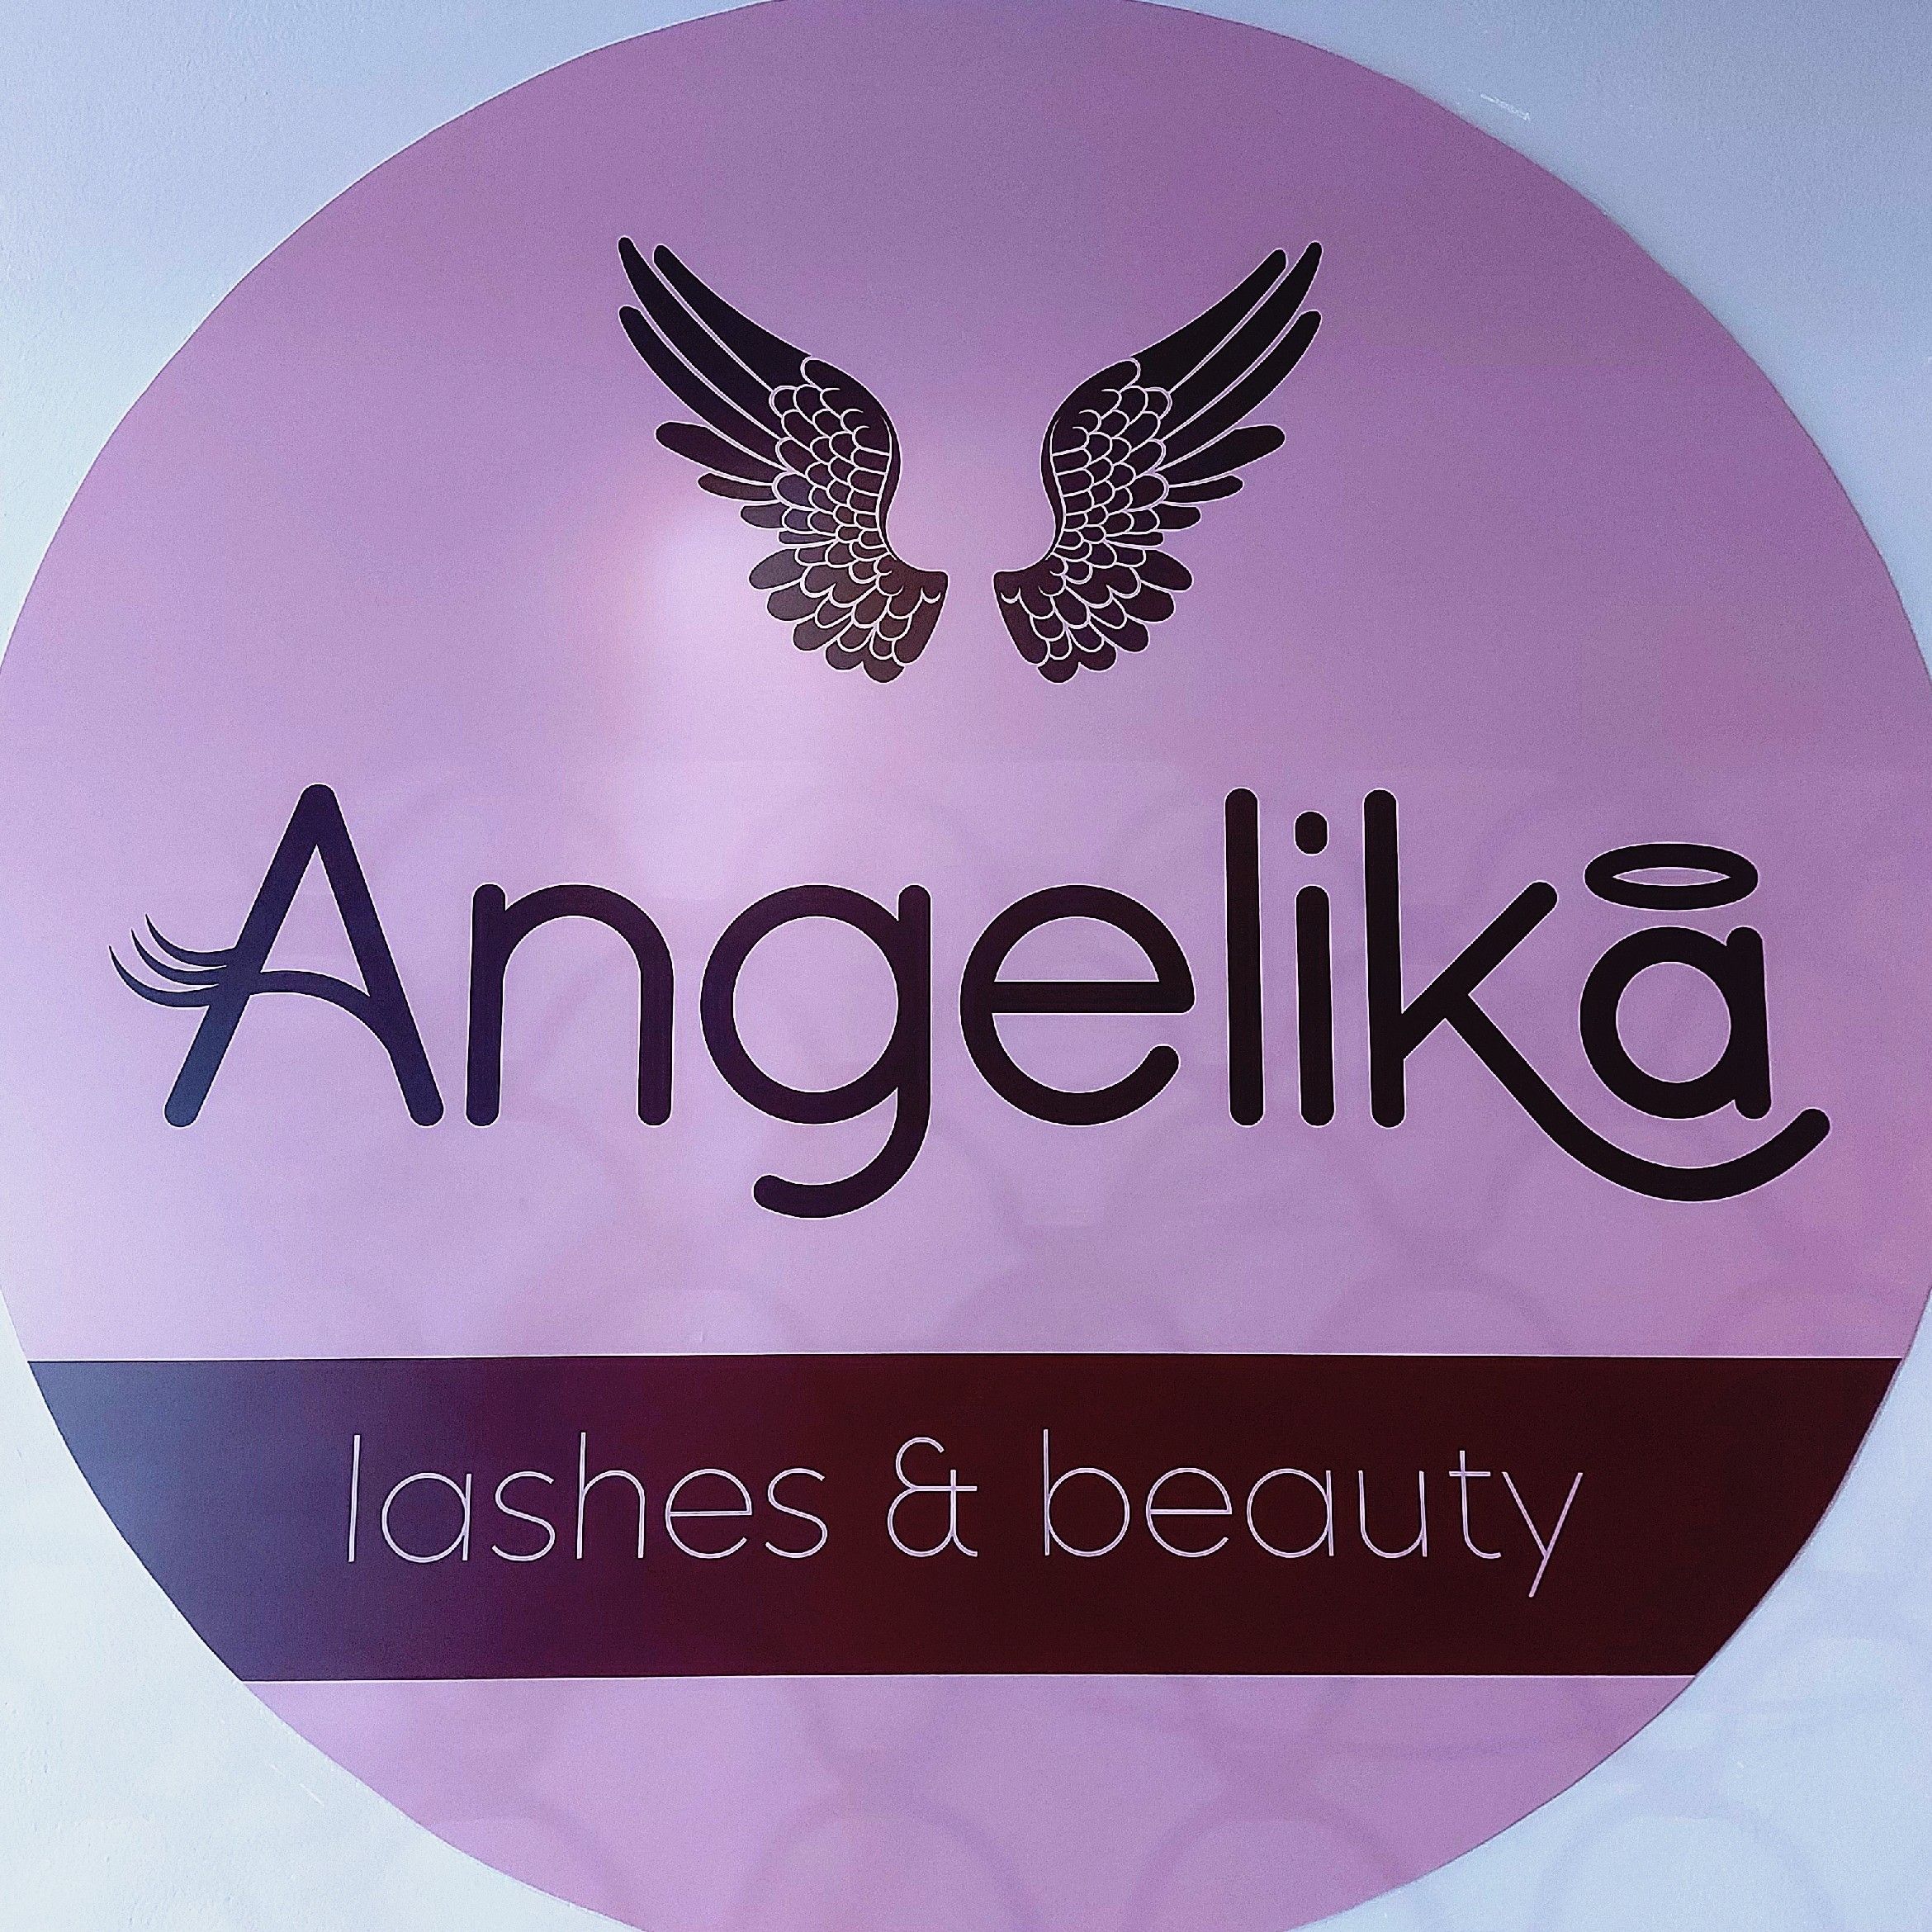 Angelika Lashes and Beauty, Hermosilla 133, 28009, Madrid